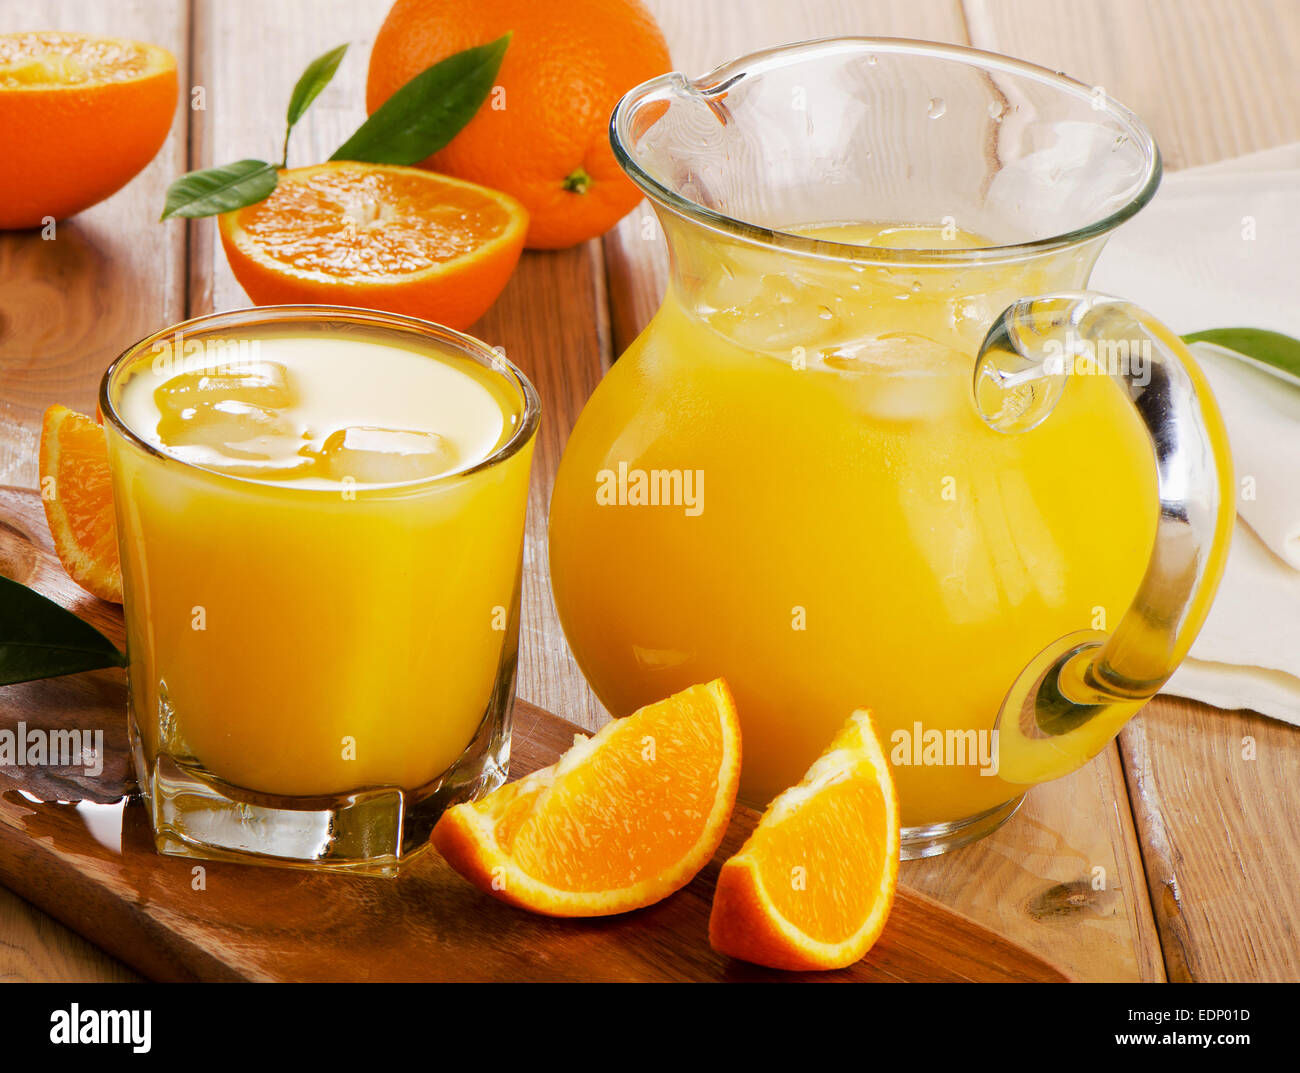 https://c8.alamy.com/comp/EDP01D/glass-and-jug-of-orange-juice-with-sliced-orange-selective-focus-EDP01D.jpg